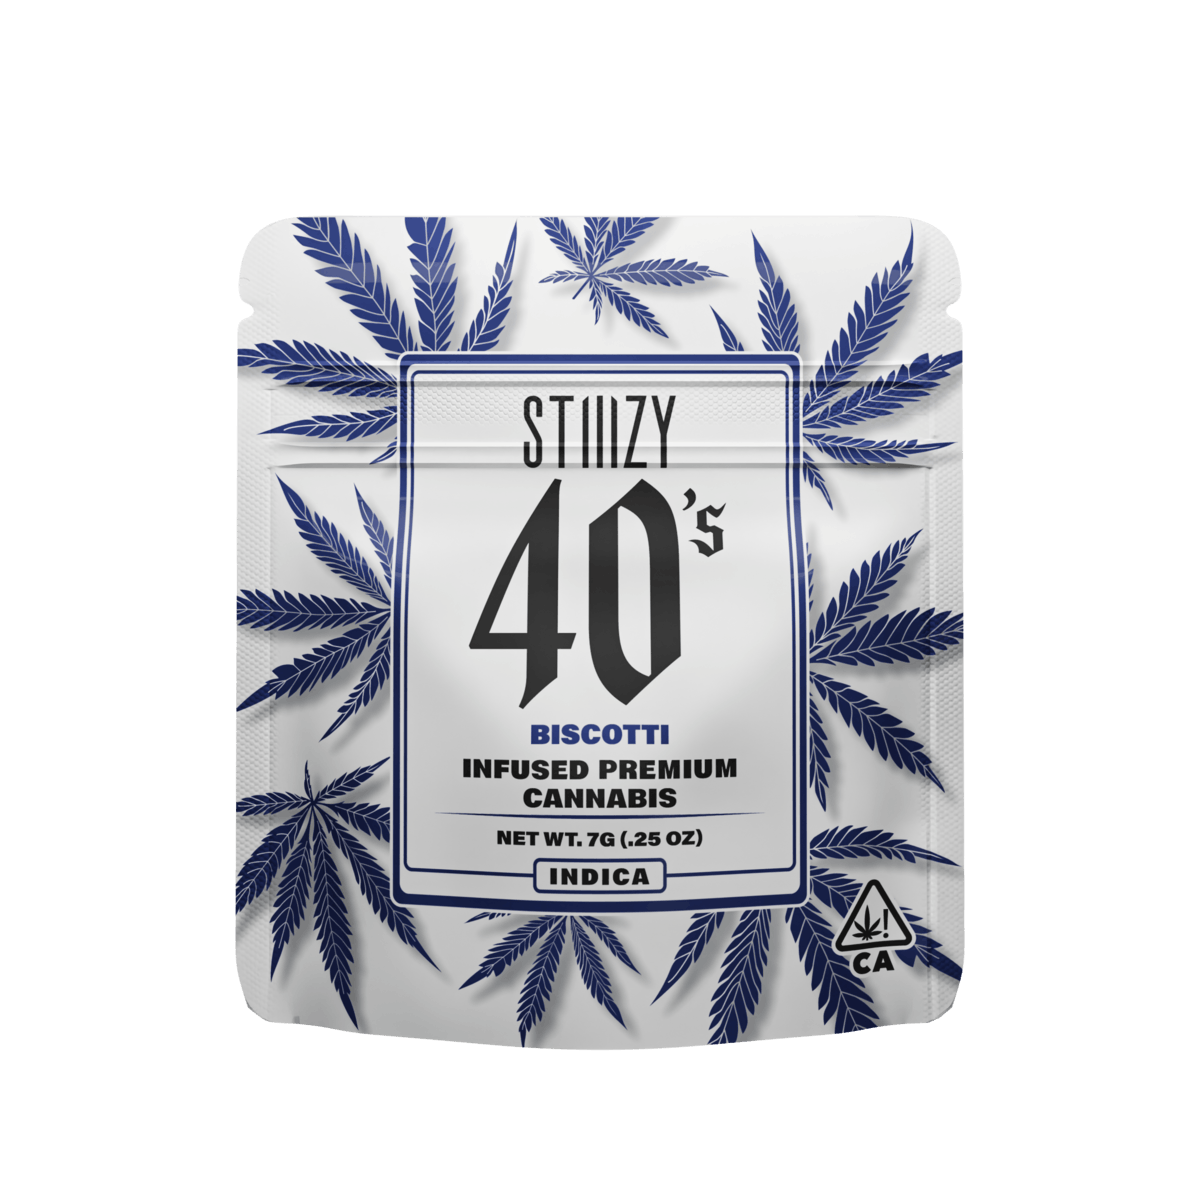 STIIIZY Infused 40s Flower - 7G Biscotti